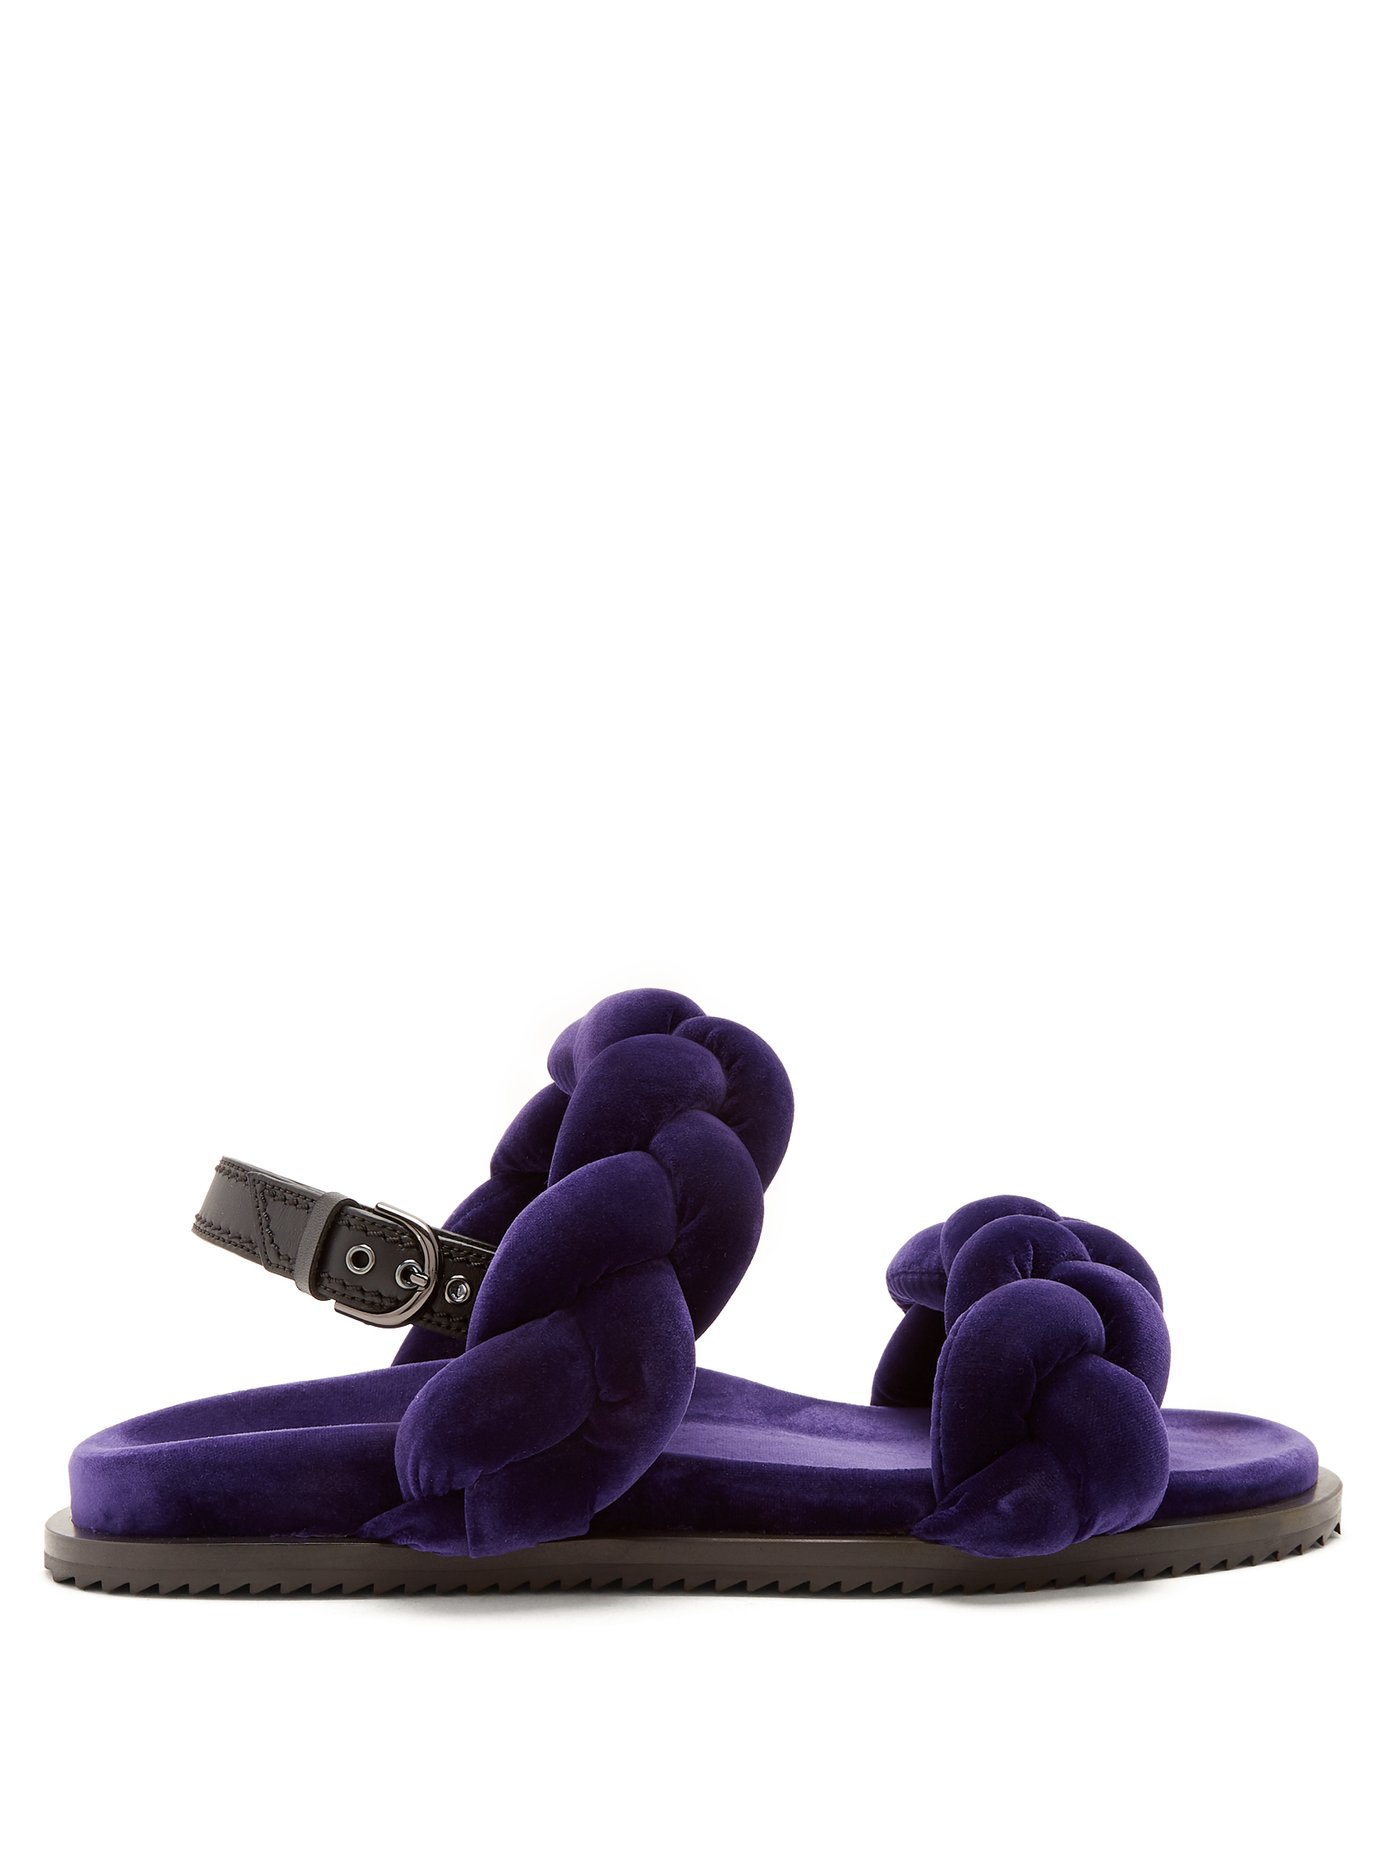 marco de vincenzo slippers